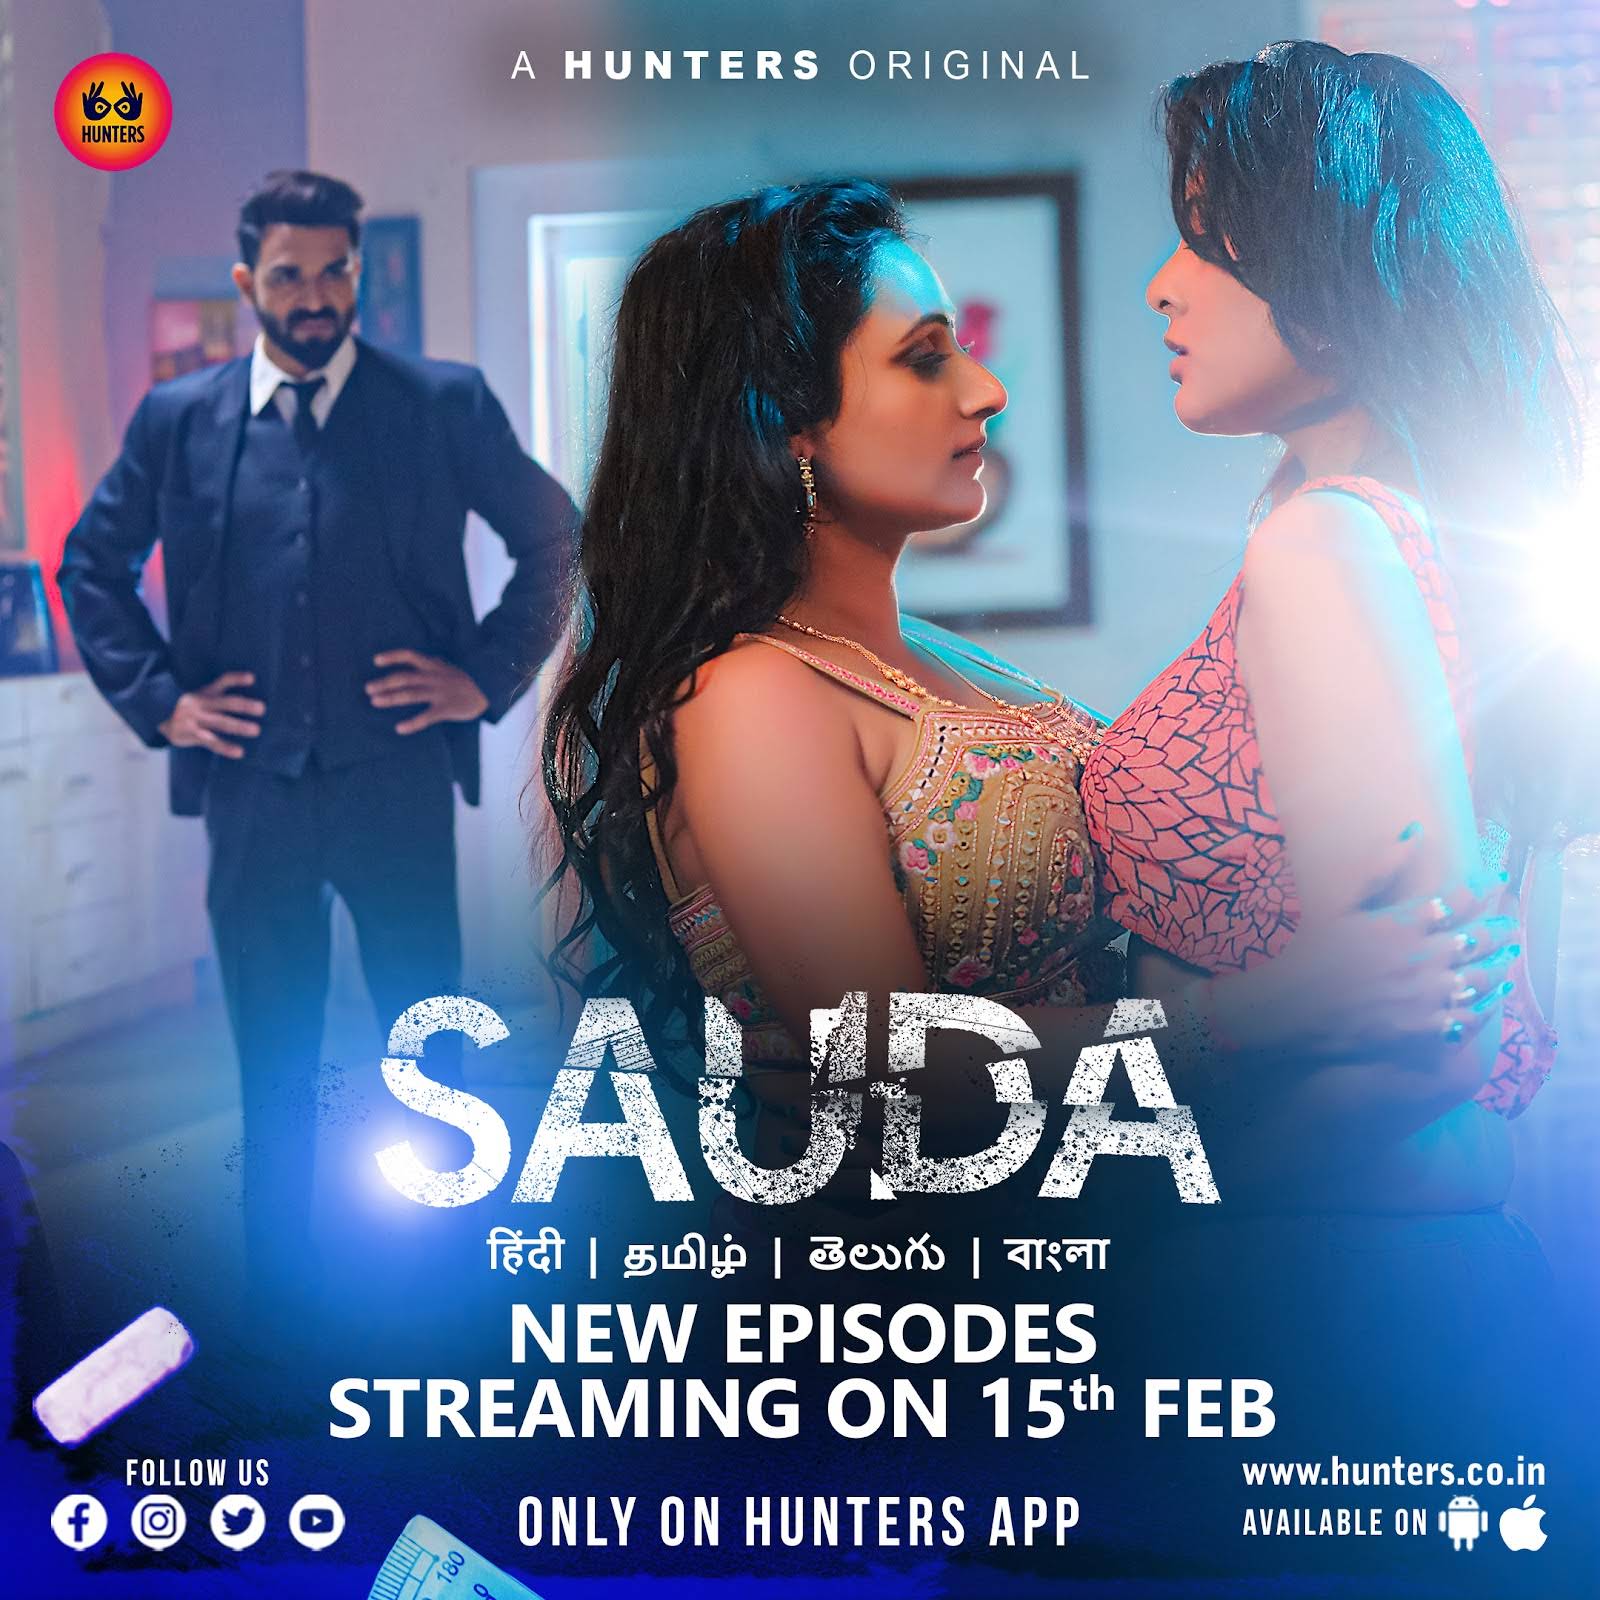 18+ Sauda 2023 S01E05 Hunters Hindi Web Series 720p HDRip 150MB Download